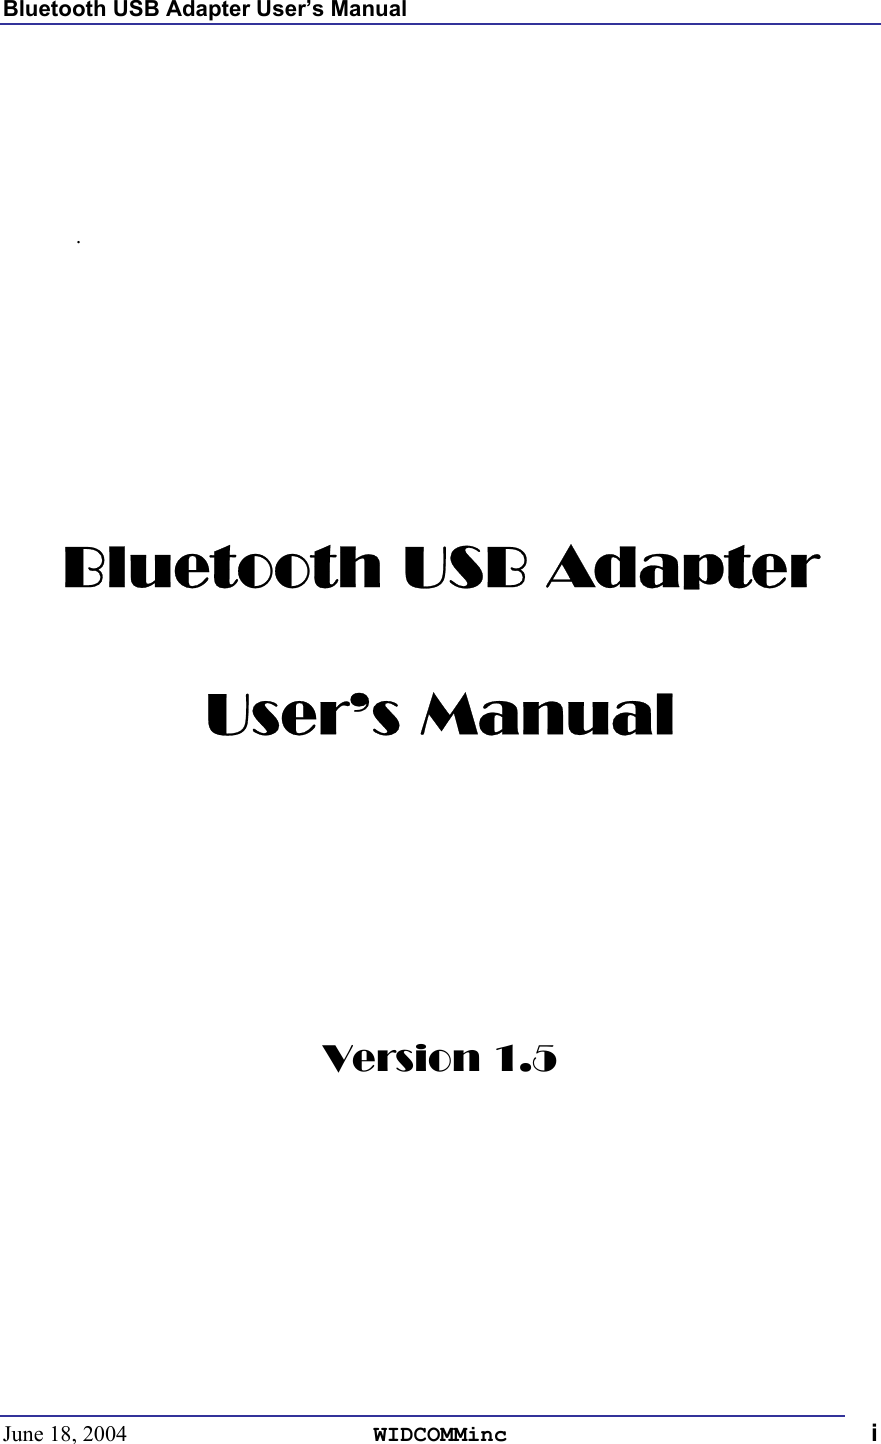 Bluetooth USB Adapter User’s Manual June 18, 2004  WIDCOMMinc i      .         Bluetooth USB Adapter User’s Manual      Version 1.5 